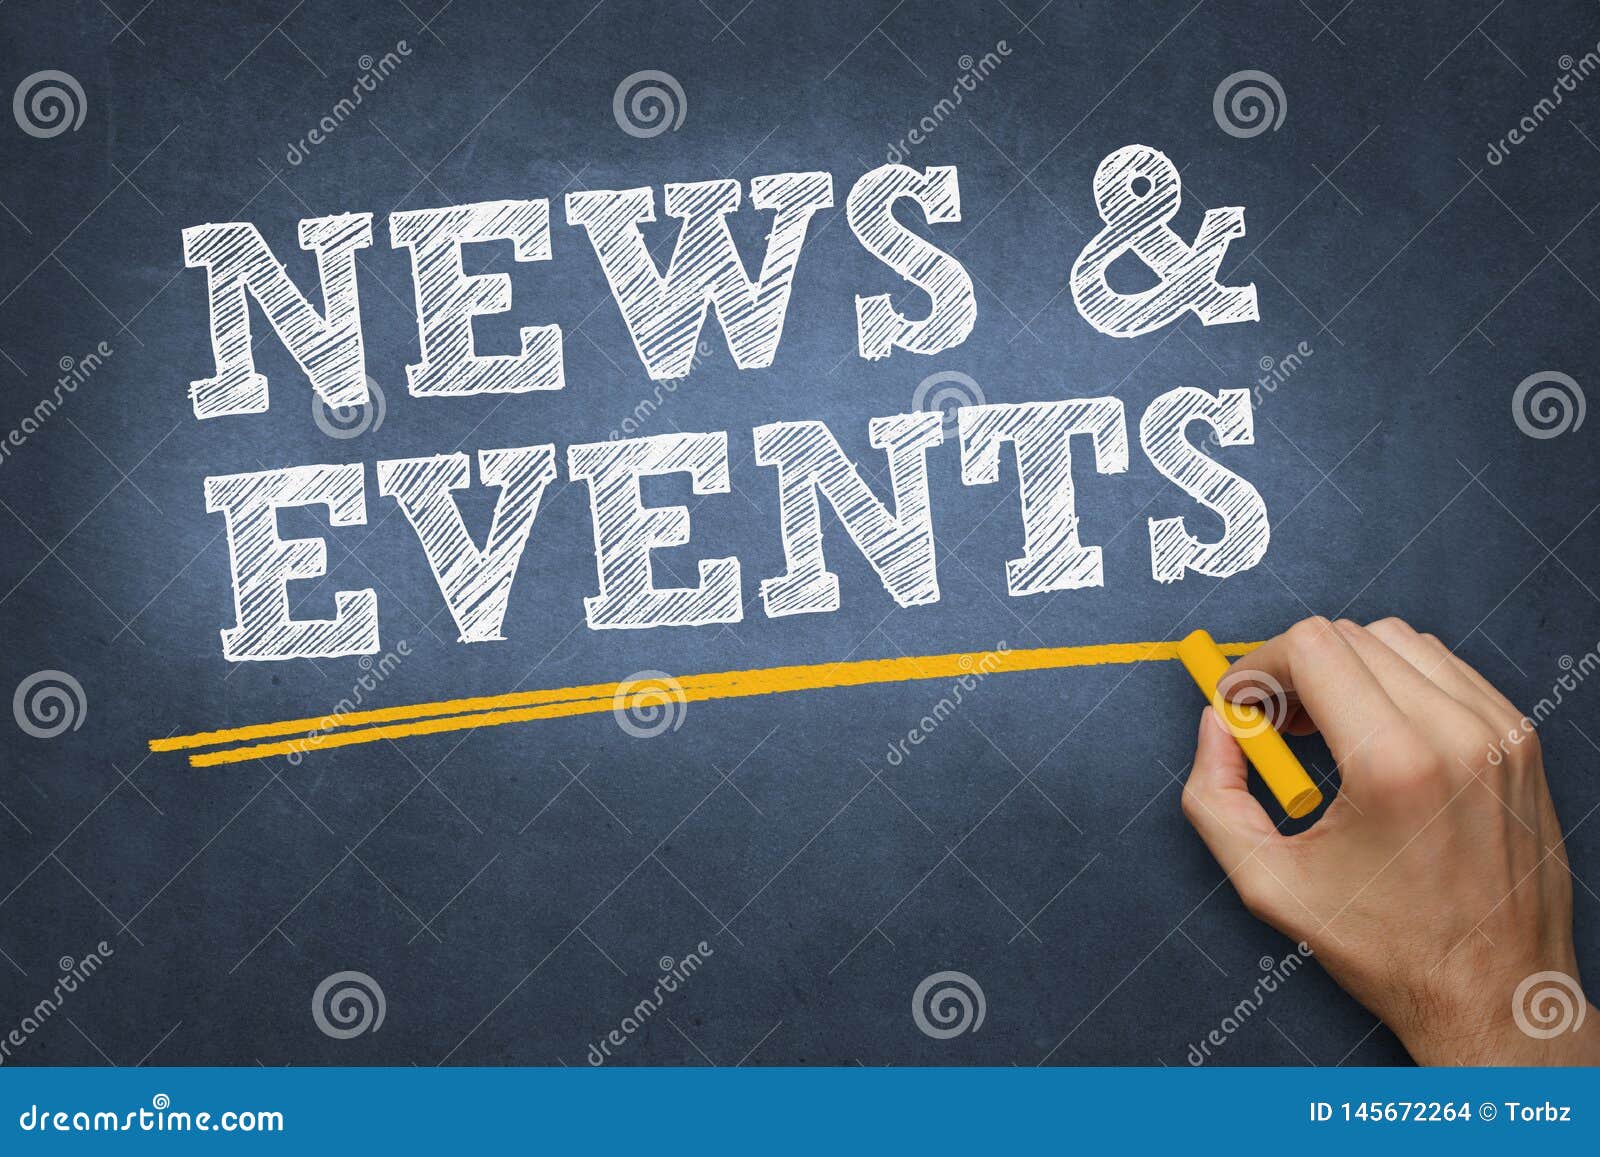 chalkboard blackboard - news and events